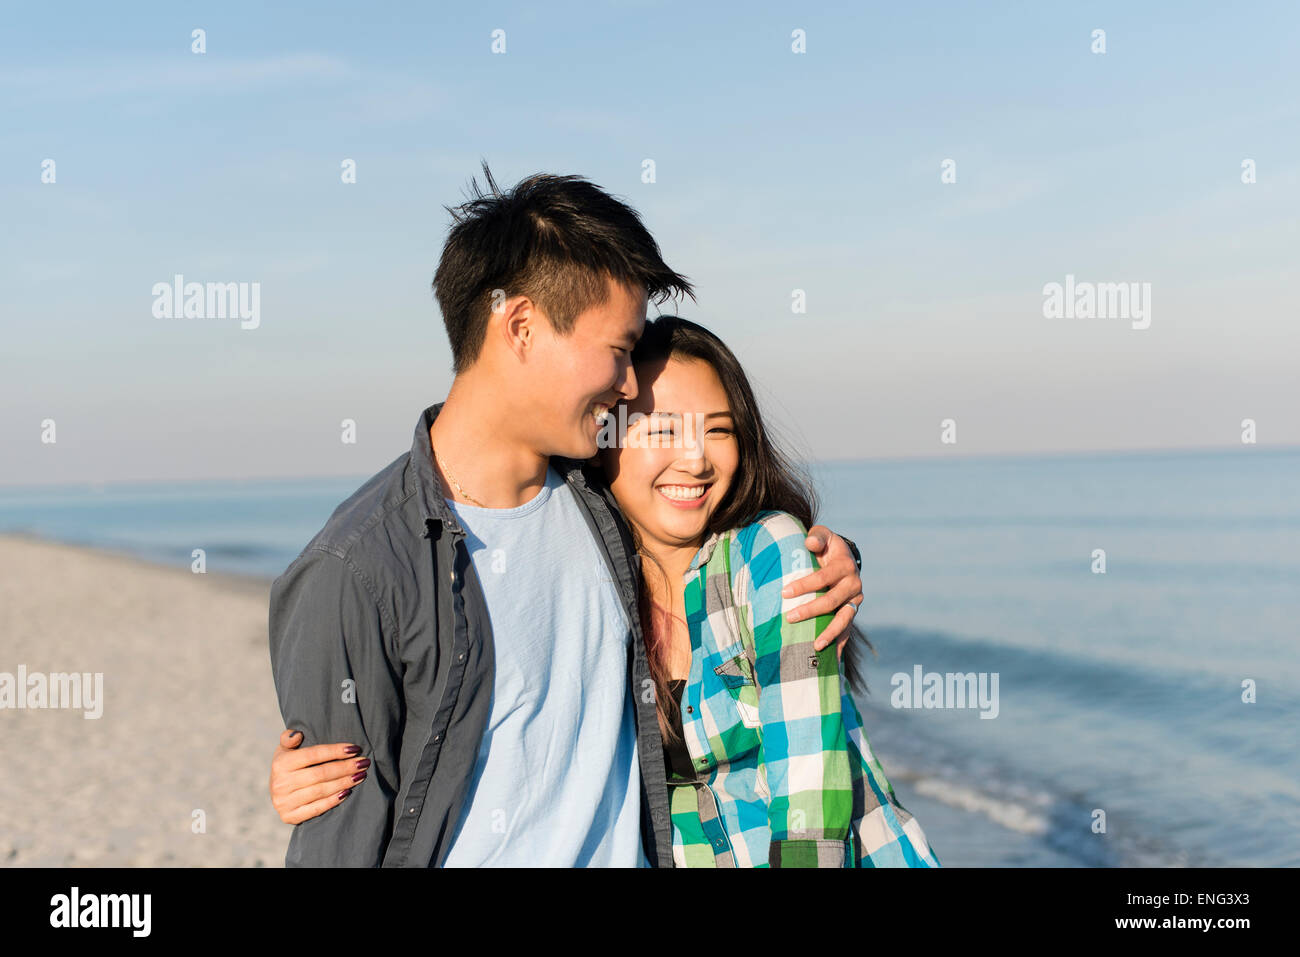 Smiling Korean couple hugging on beach Stock Photo